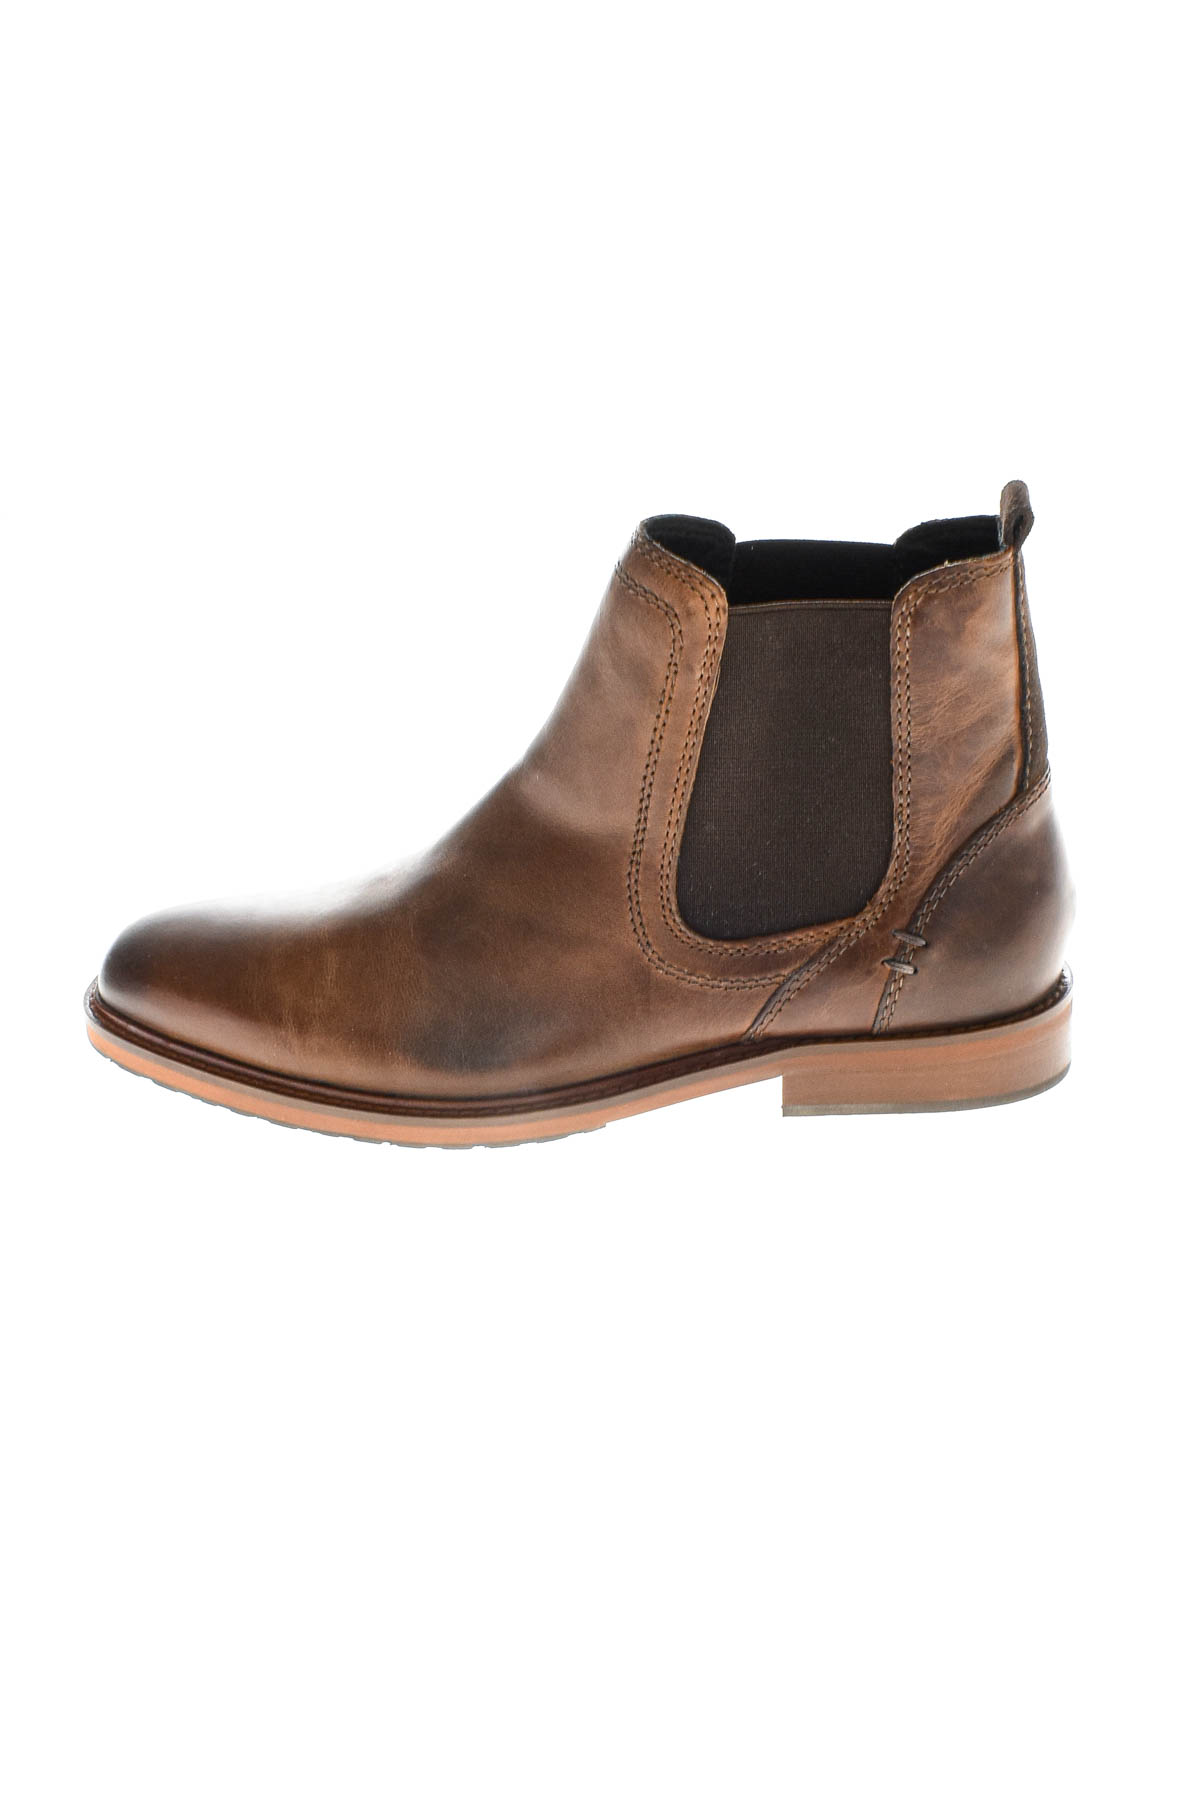 Men's boots - ALDO - 0